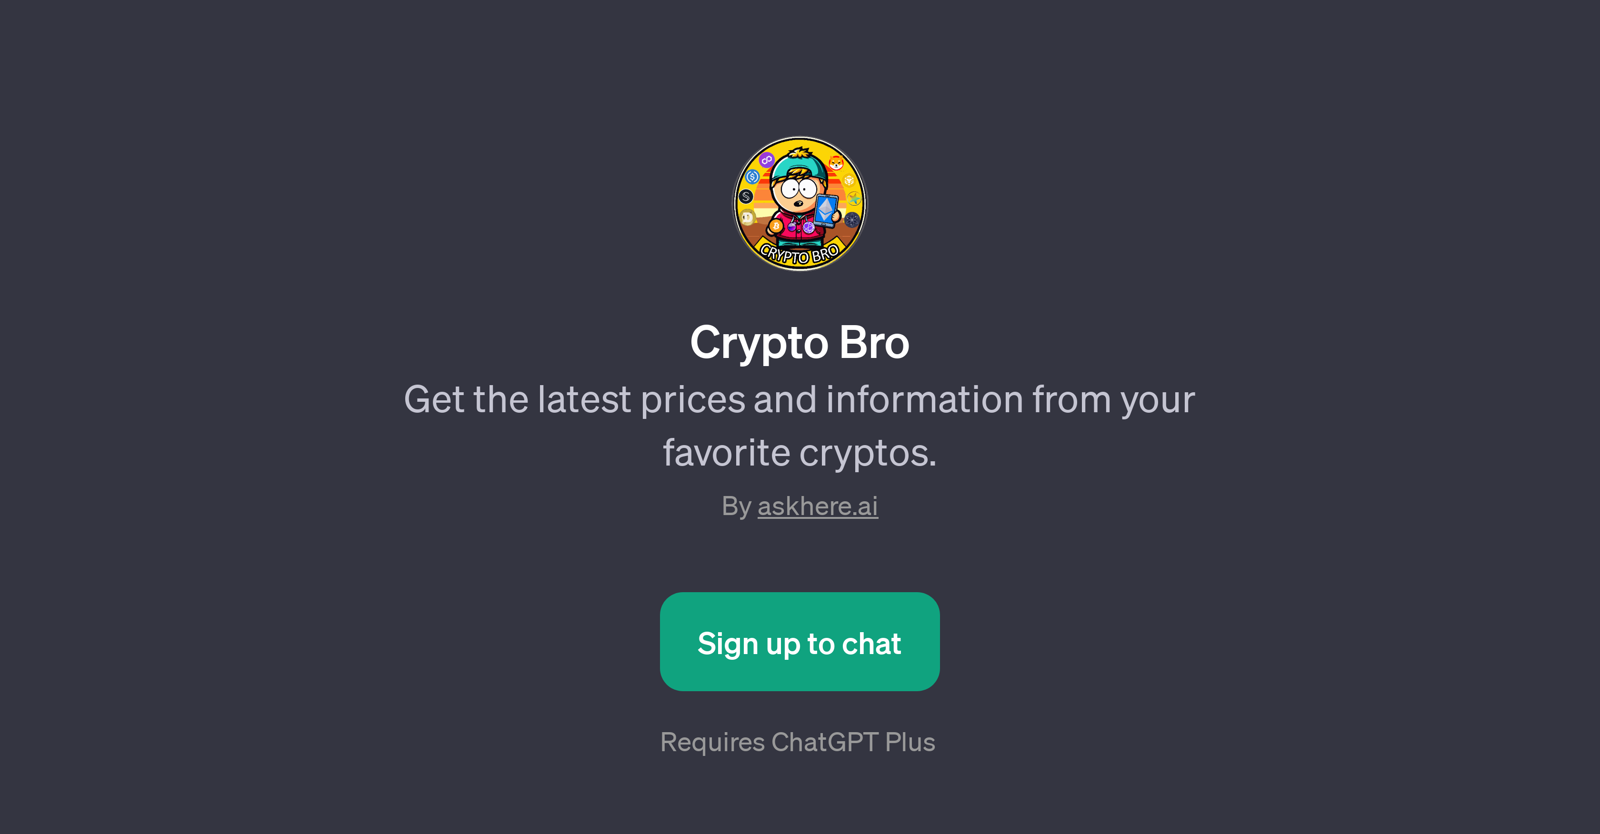 Crypto Bro website